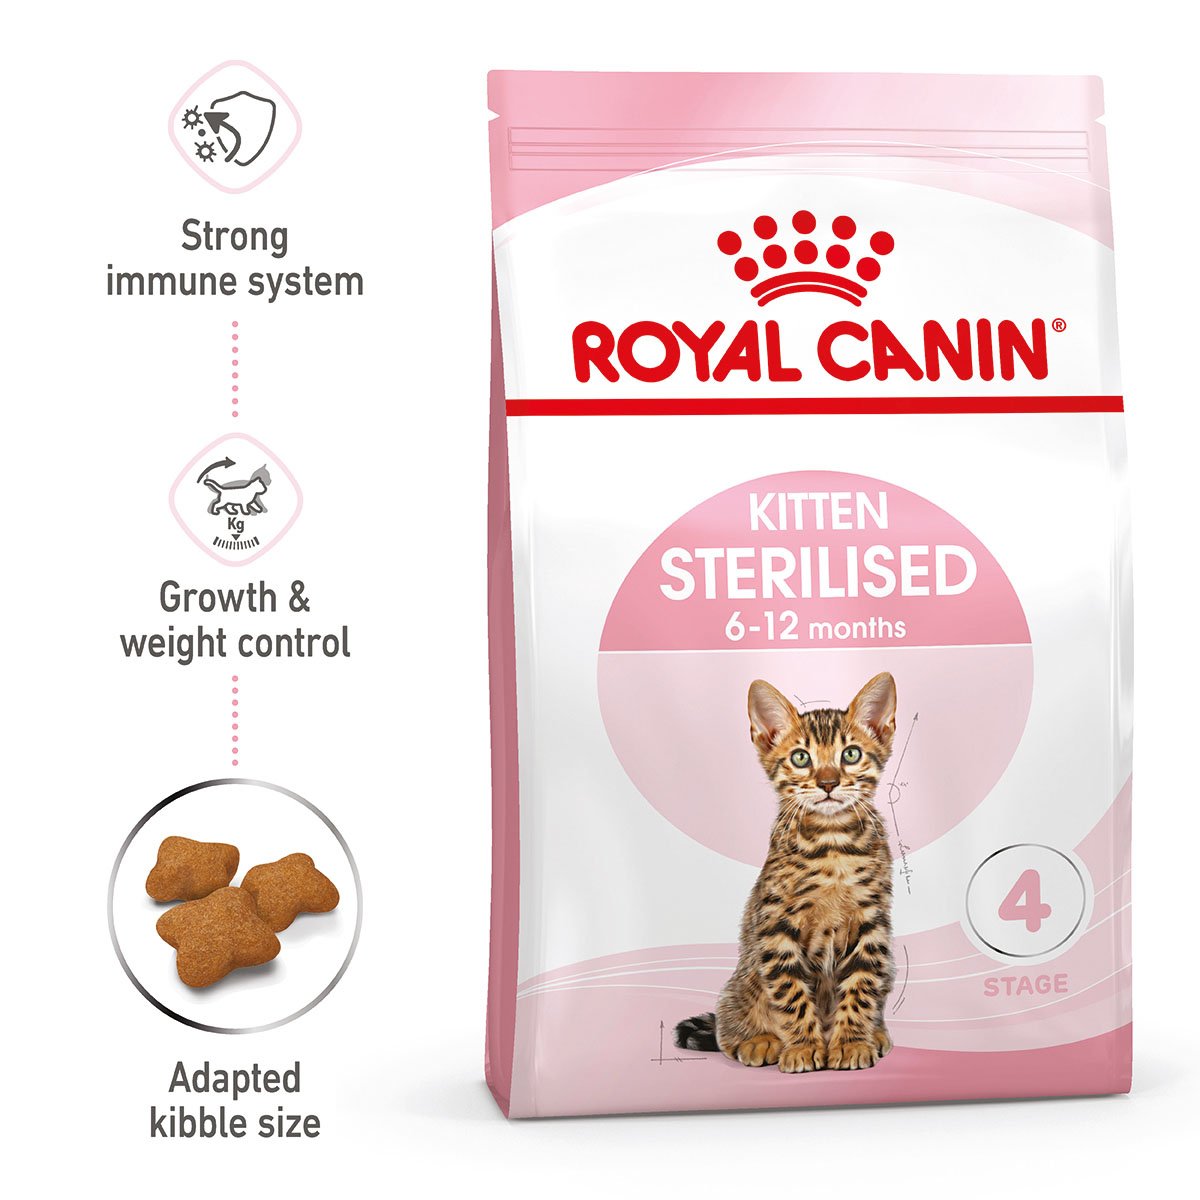 ROYAL CANIN KITTEN Sterilised Kittenfutter für kastrierte Kätzchen